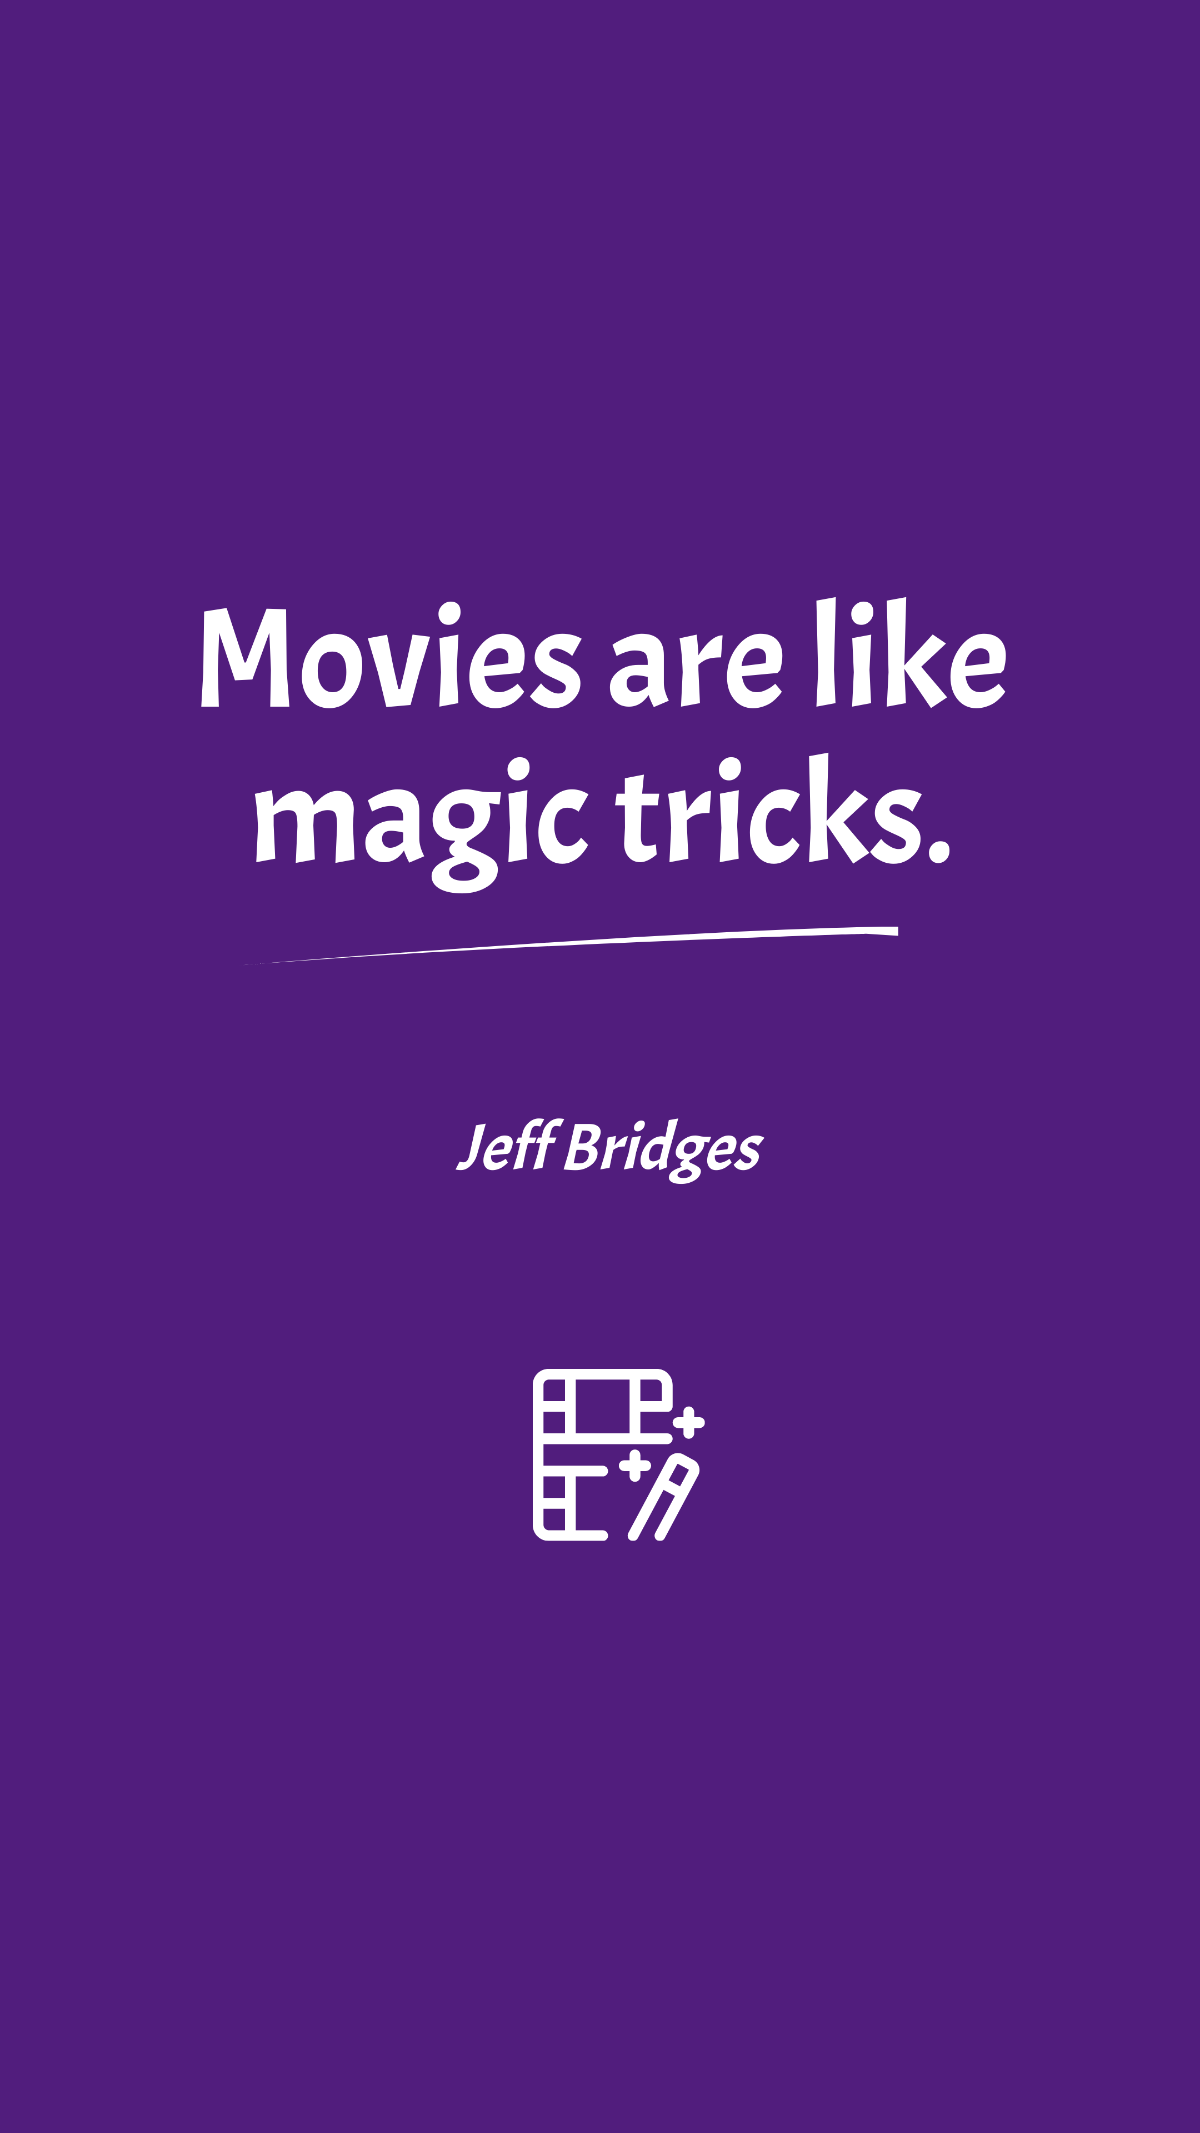 Jeff Bridges - Movies are like magic tricks. Template